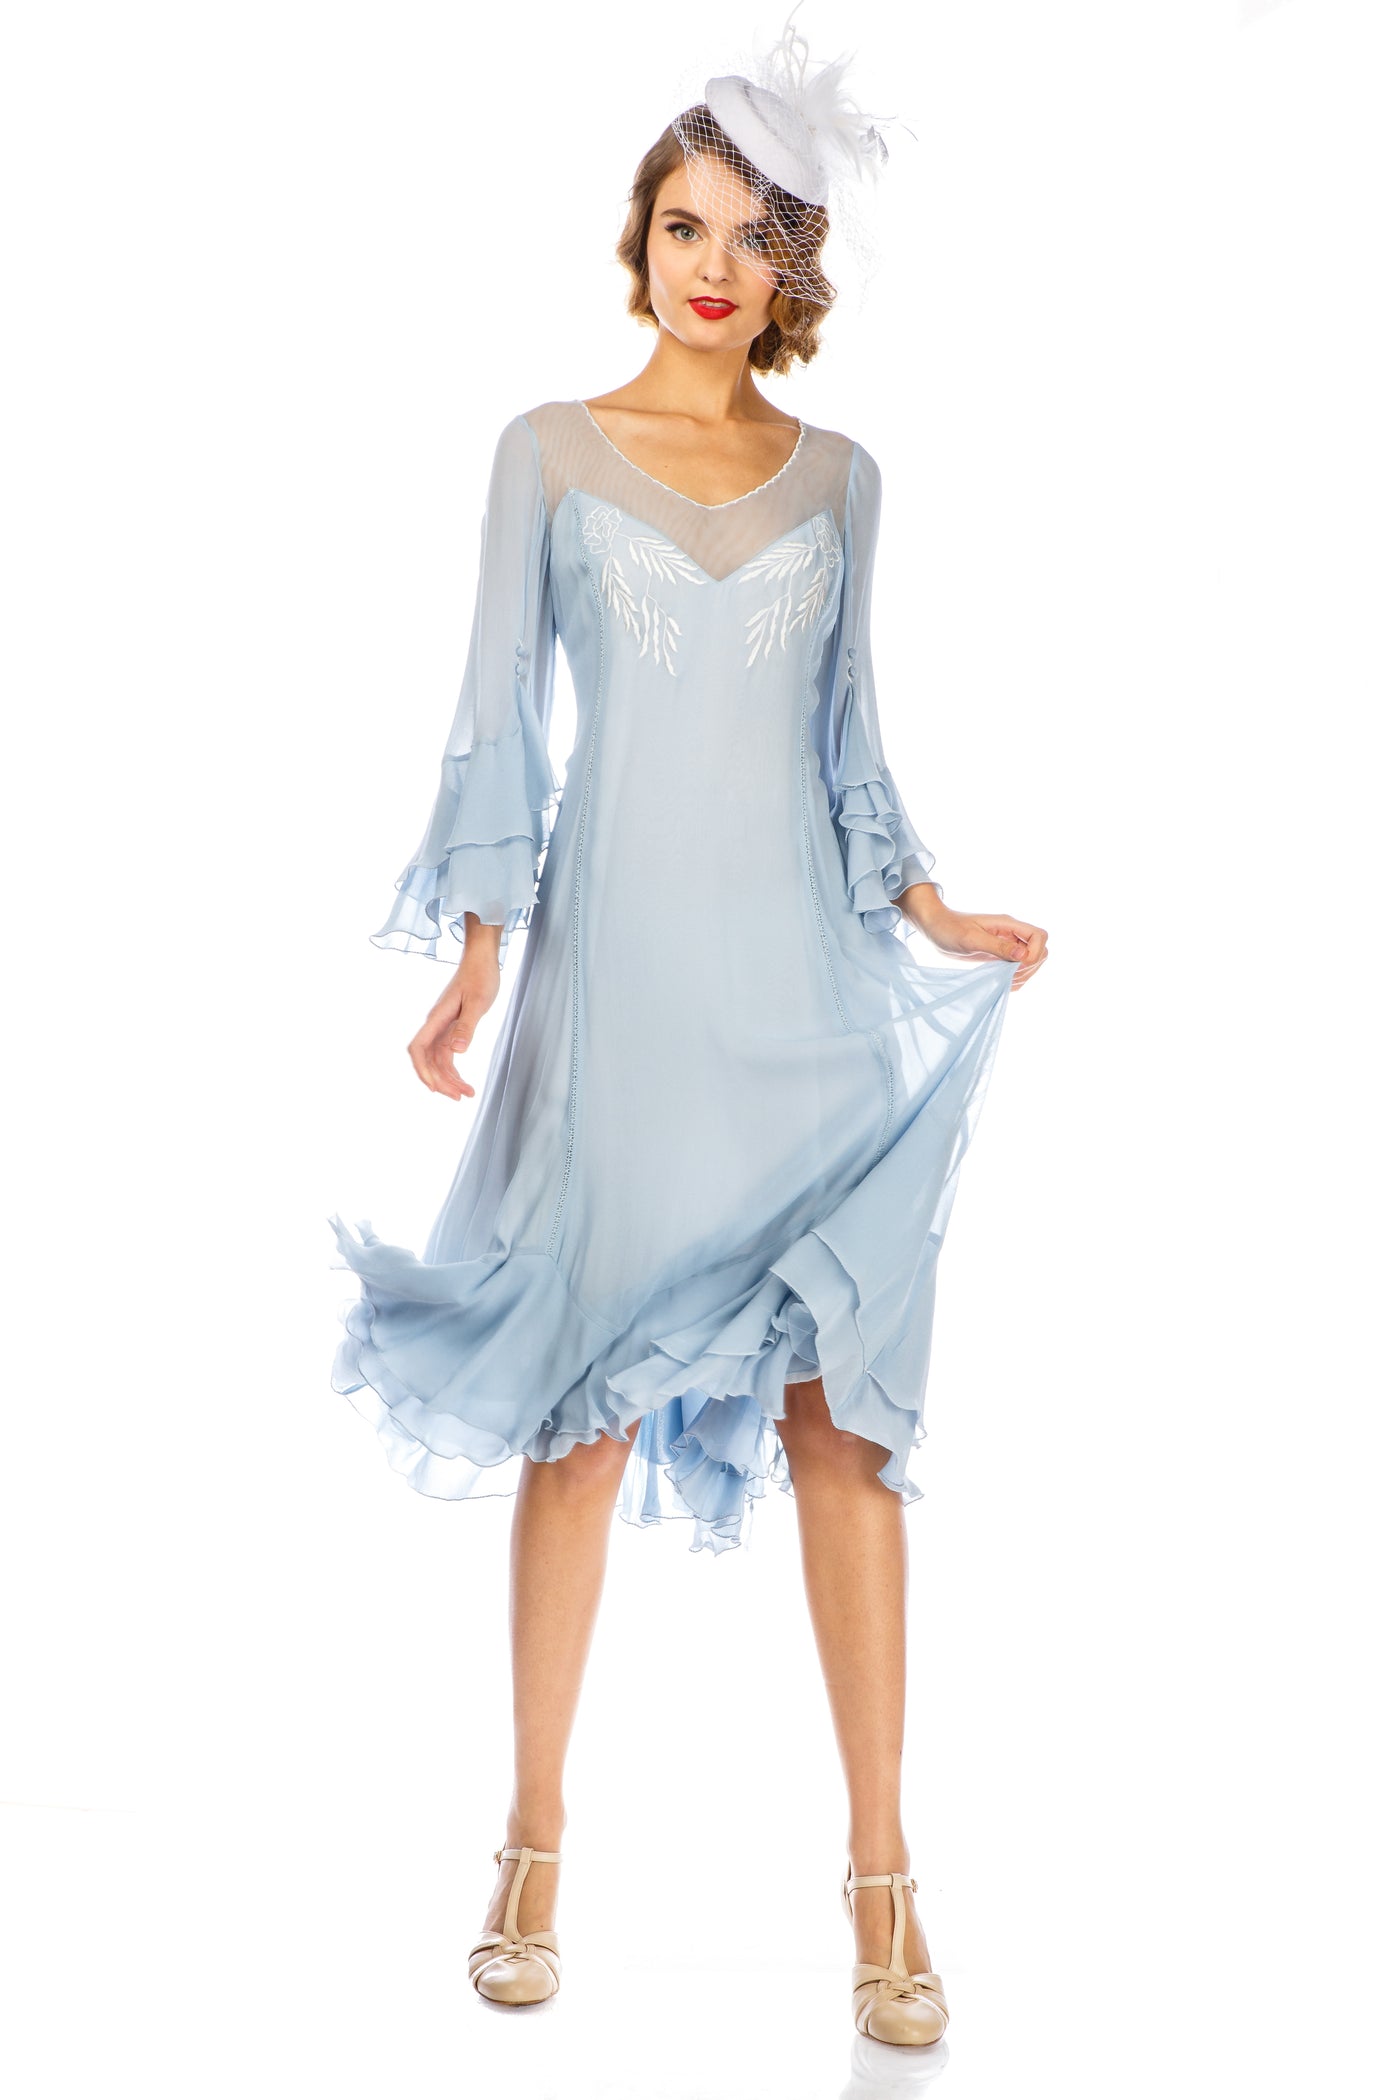 Vintage Inspired 40816 Sky Blue Dress by Nataya